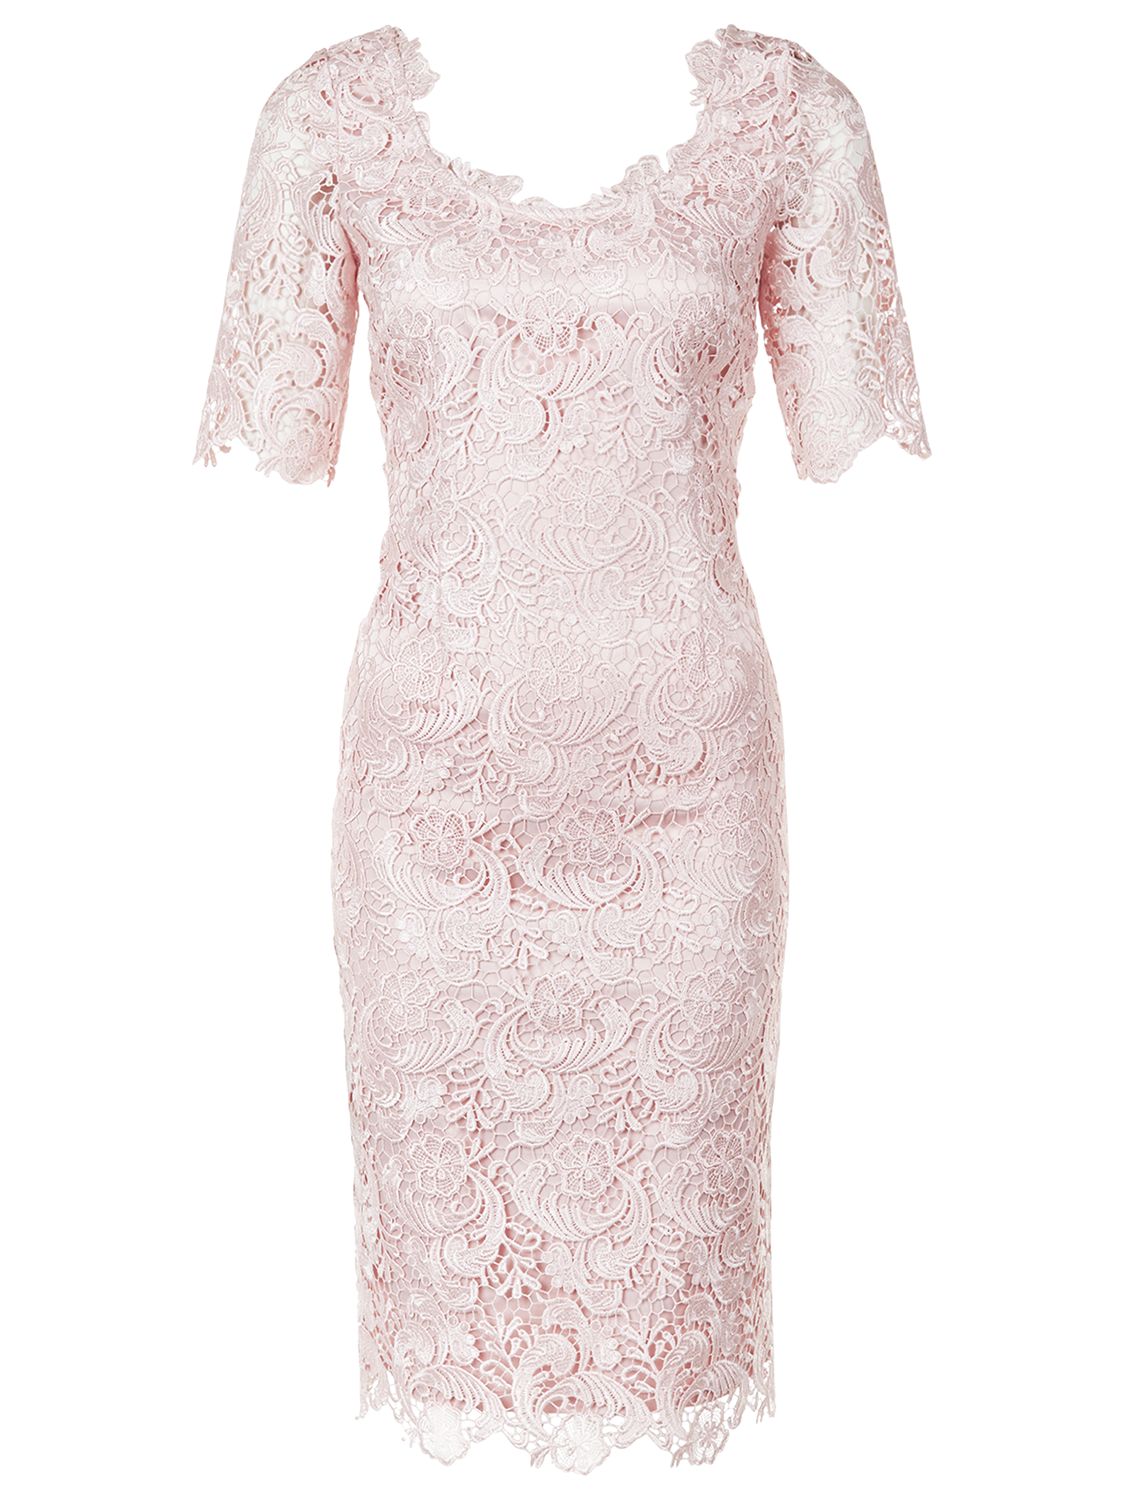 Jacques Vert Luxury Lace Dress, Light Pink